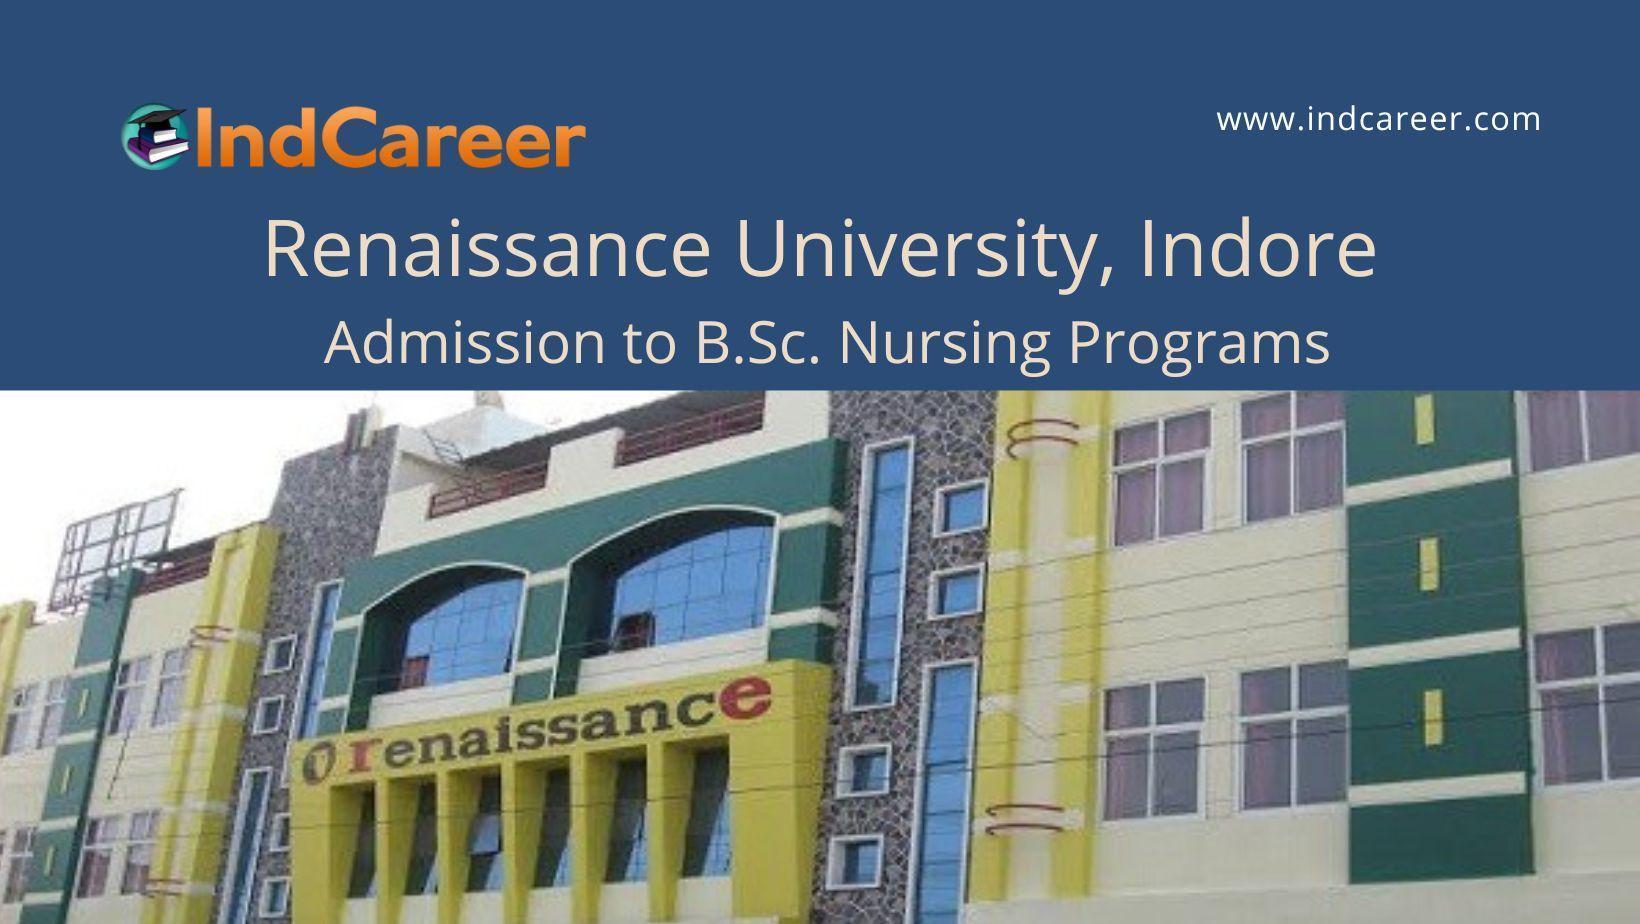 Renaissance University, Indore B.Sc. Nursing Admission IndCareer